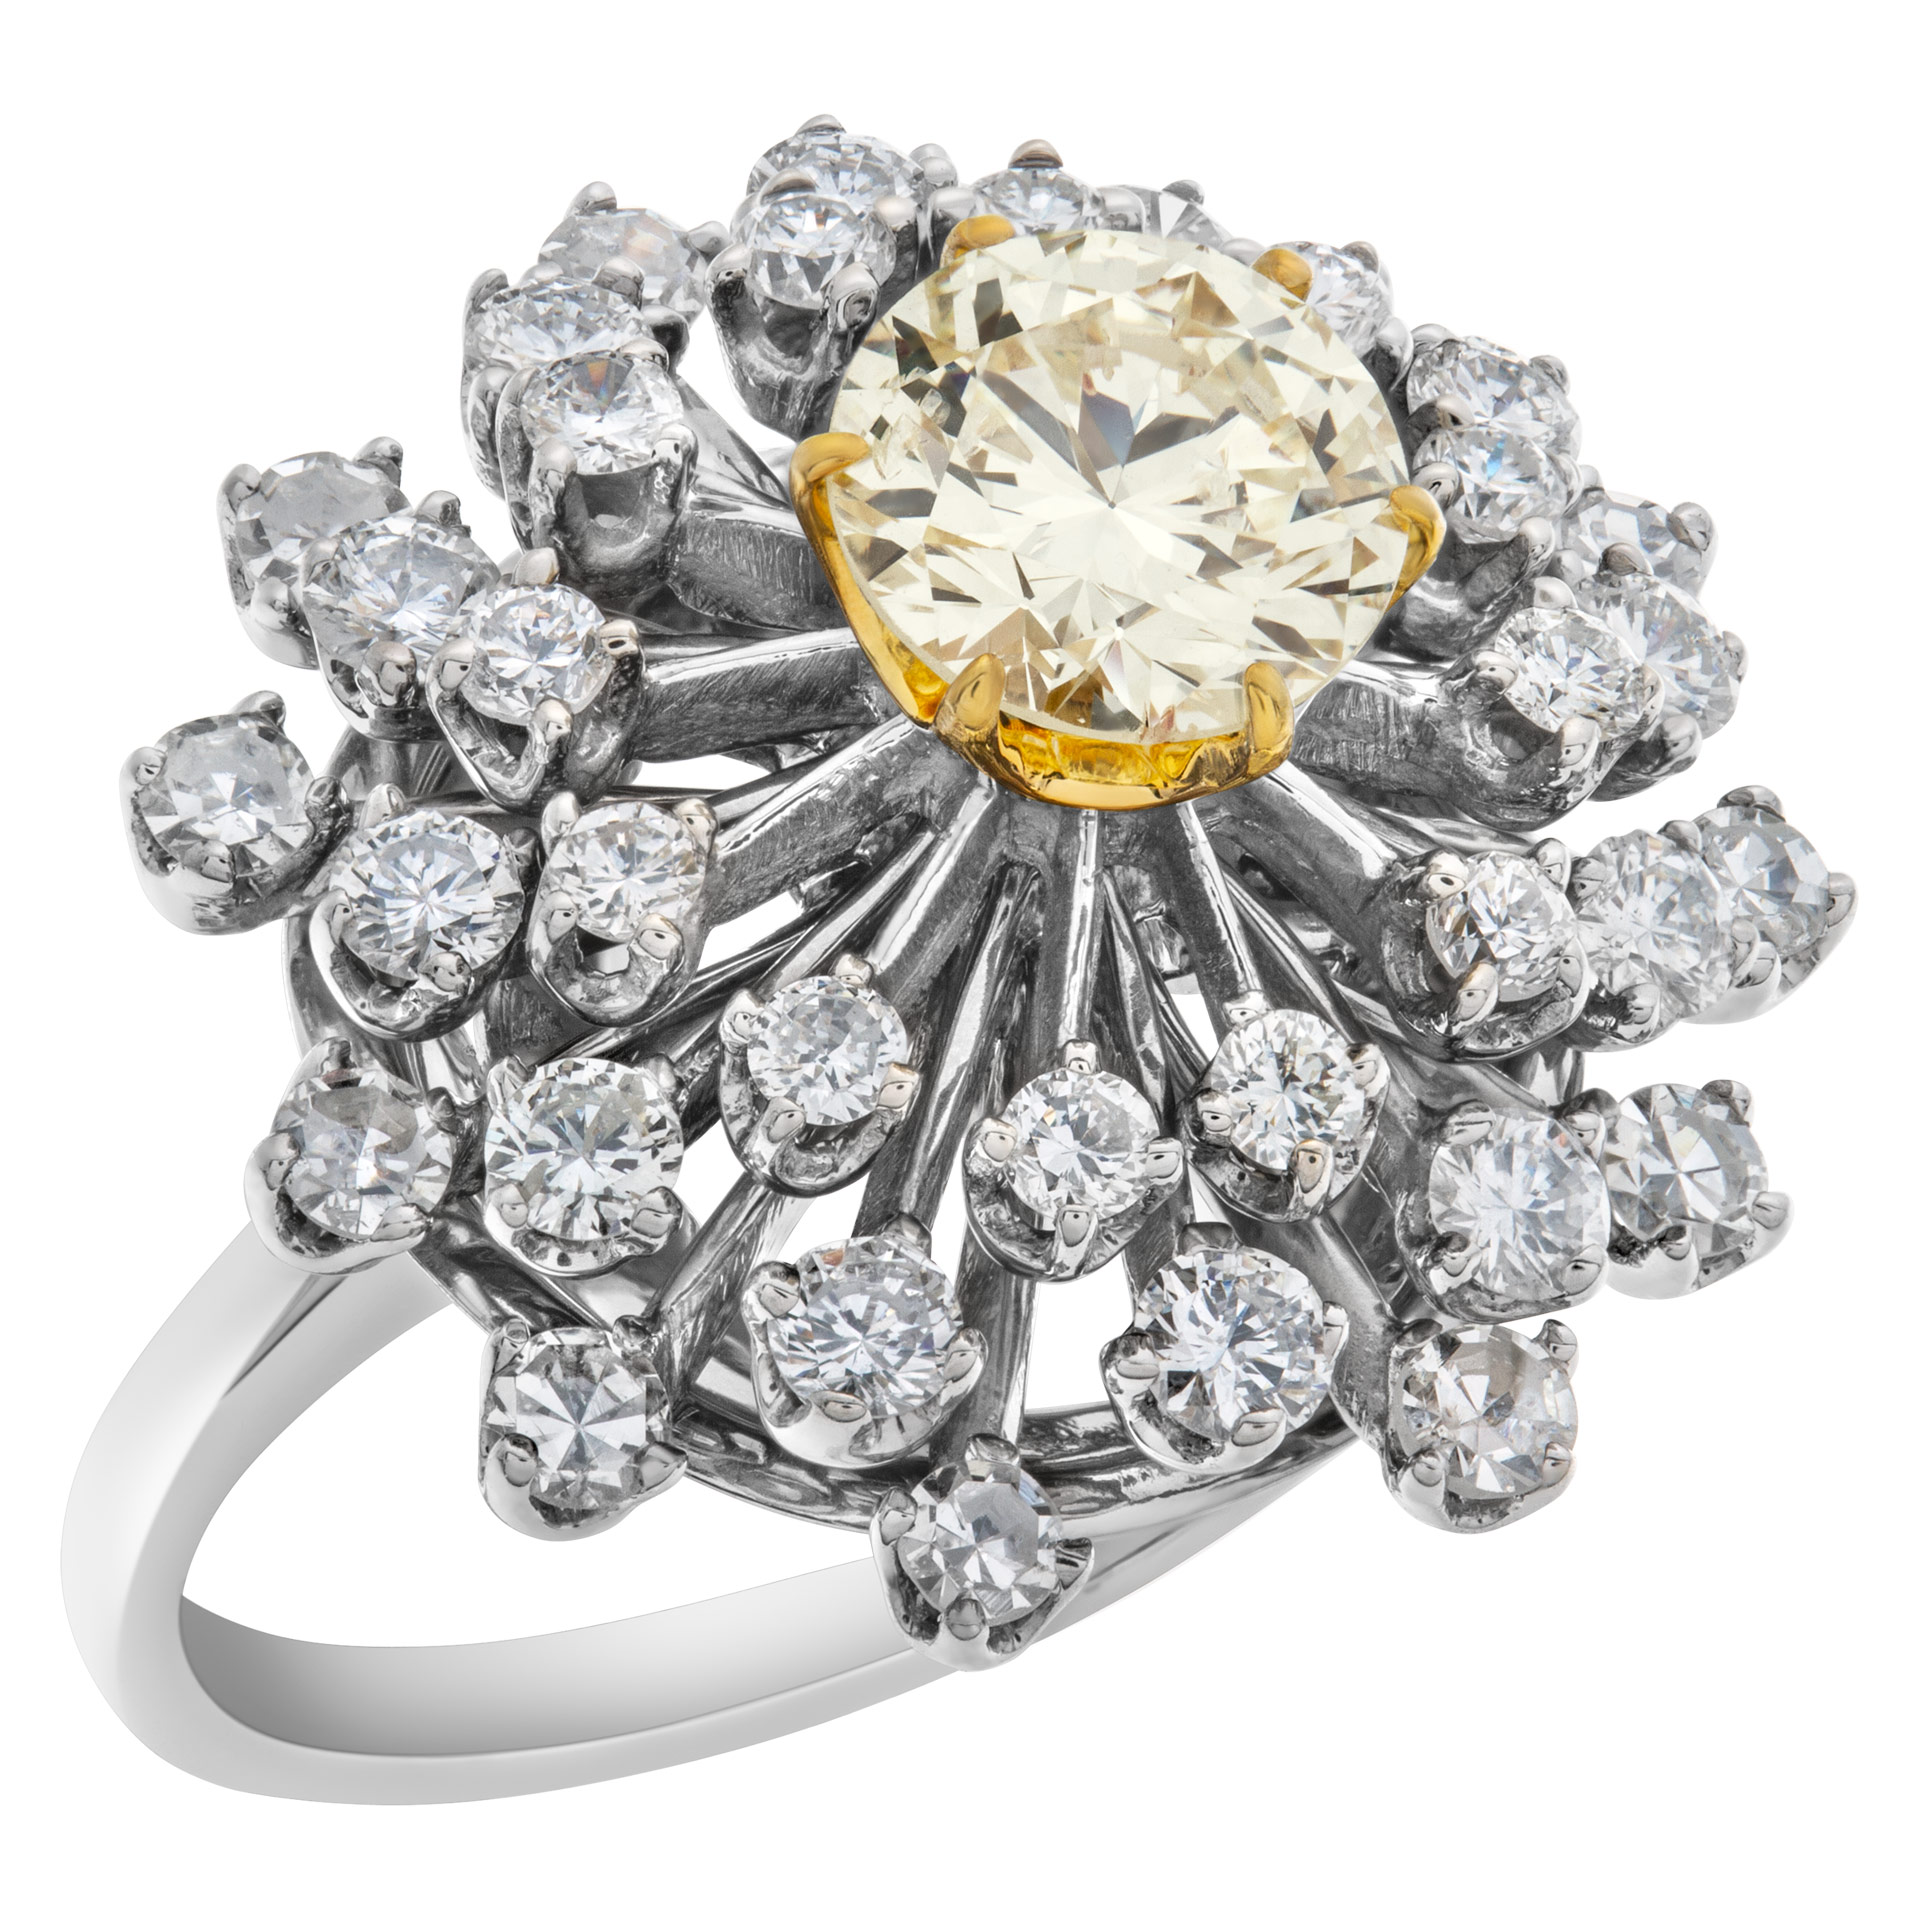 GIA certified round brilliant cut diamond 1.18 carat (O-P range color, I1 clarity) ring image 2